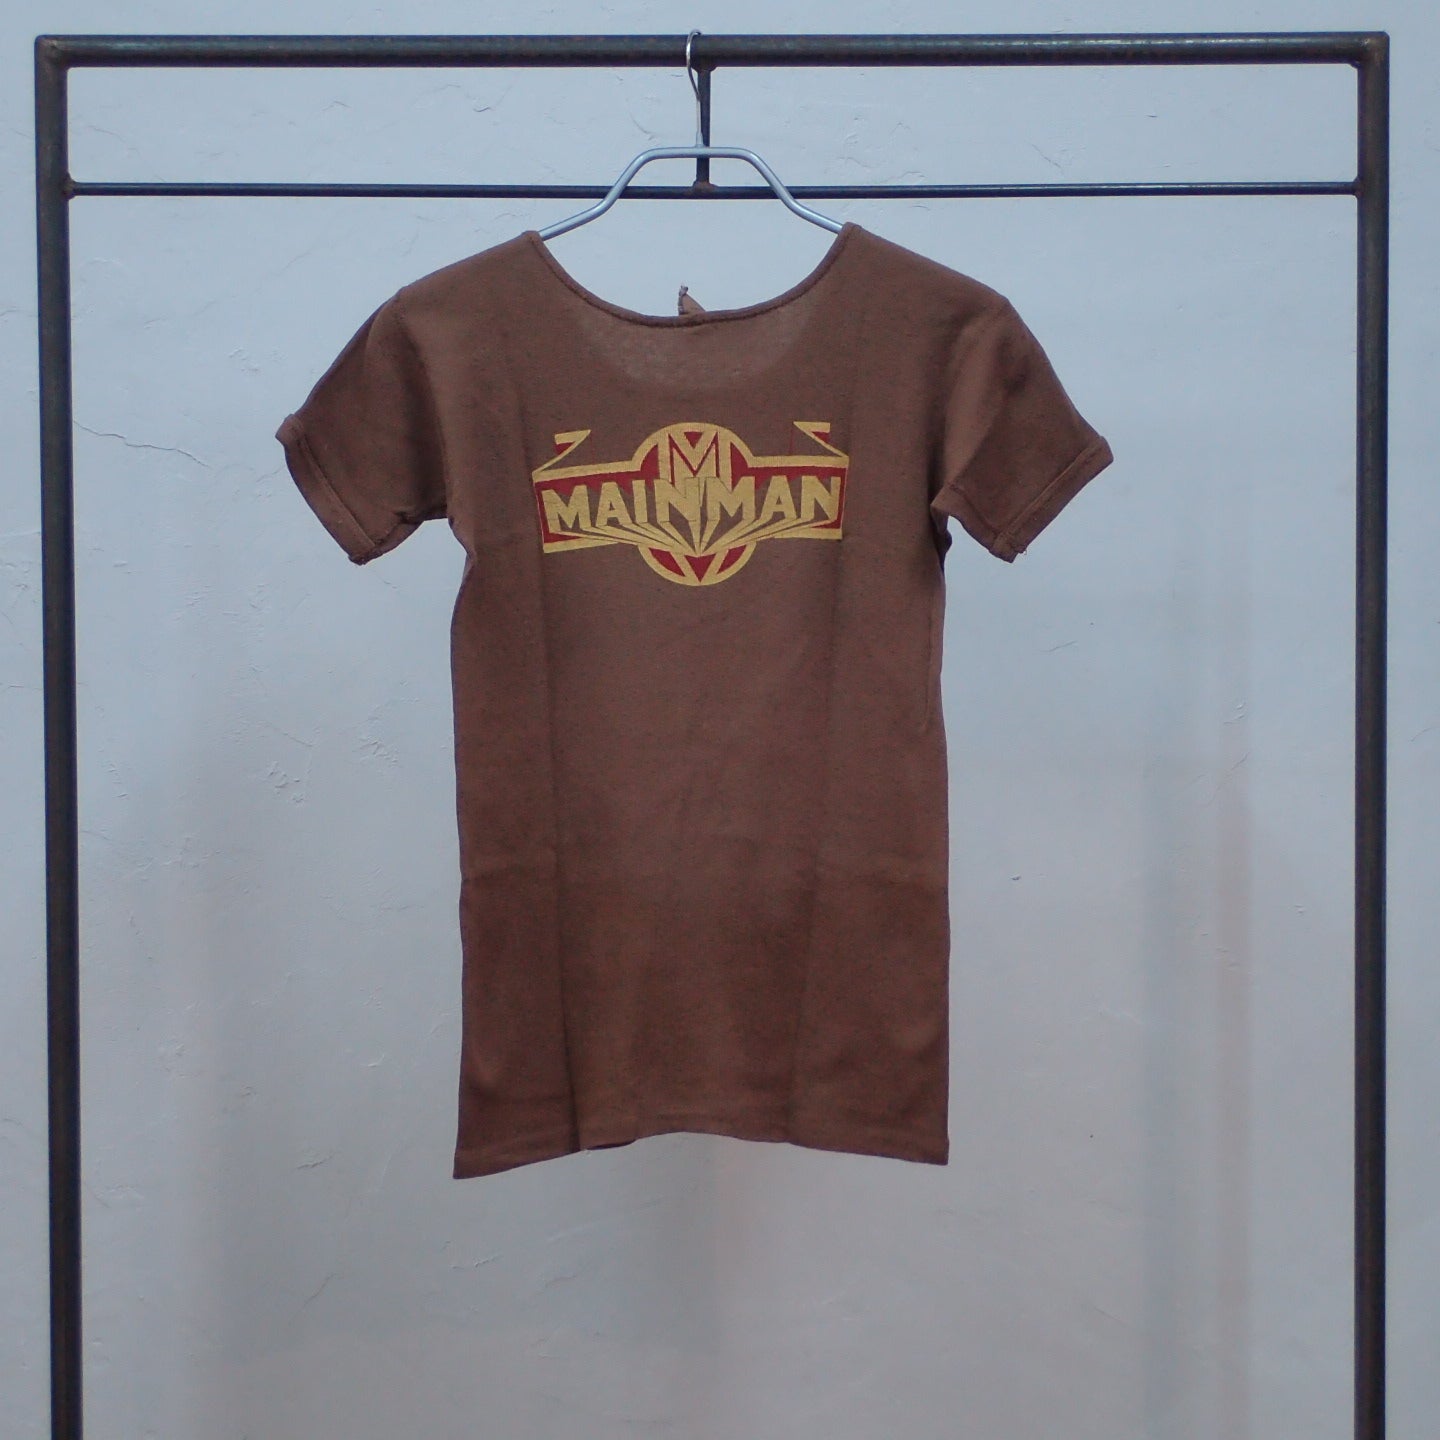 70s David Bowie T-shirt "Diamond Dogs Tour Stuff Tee"